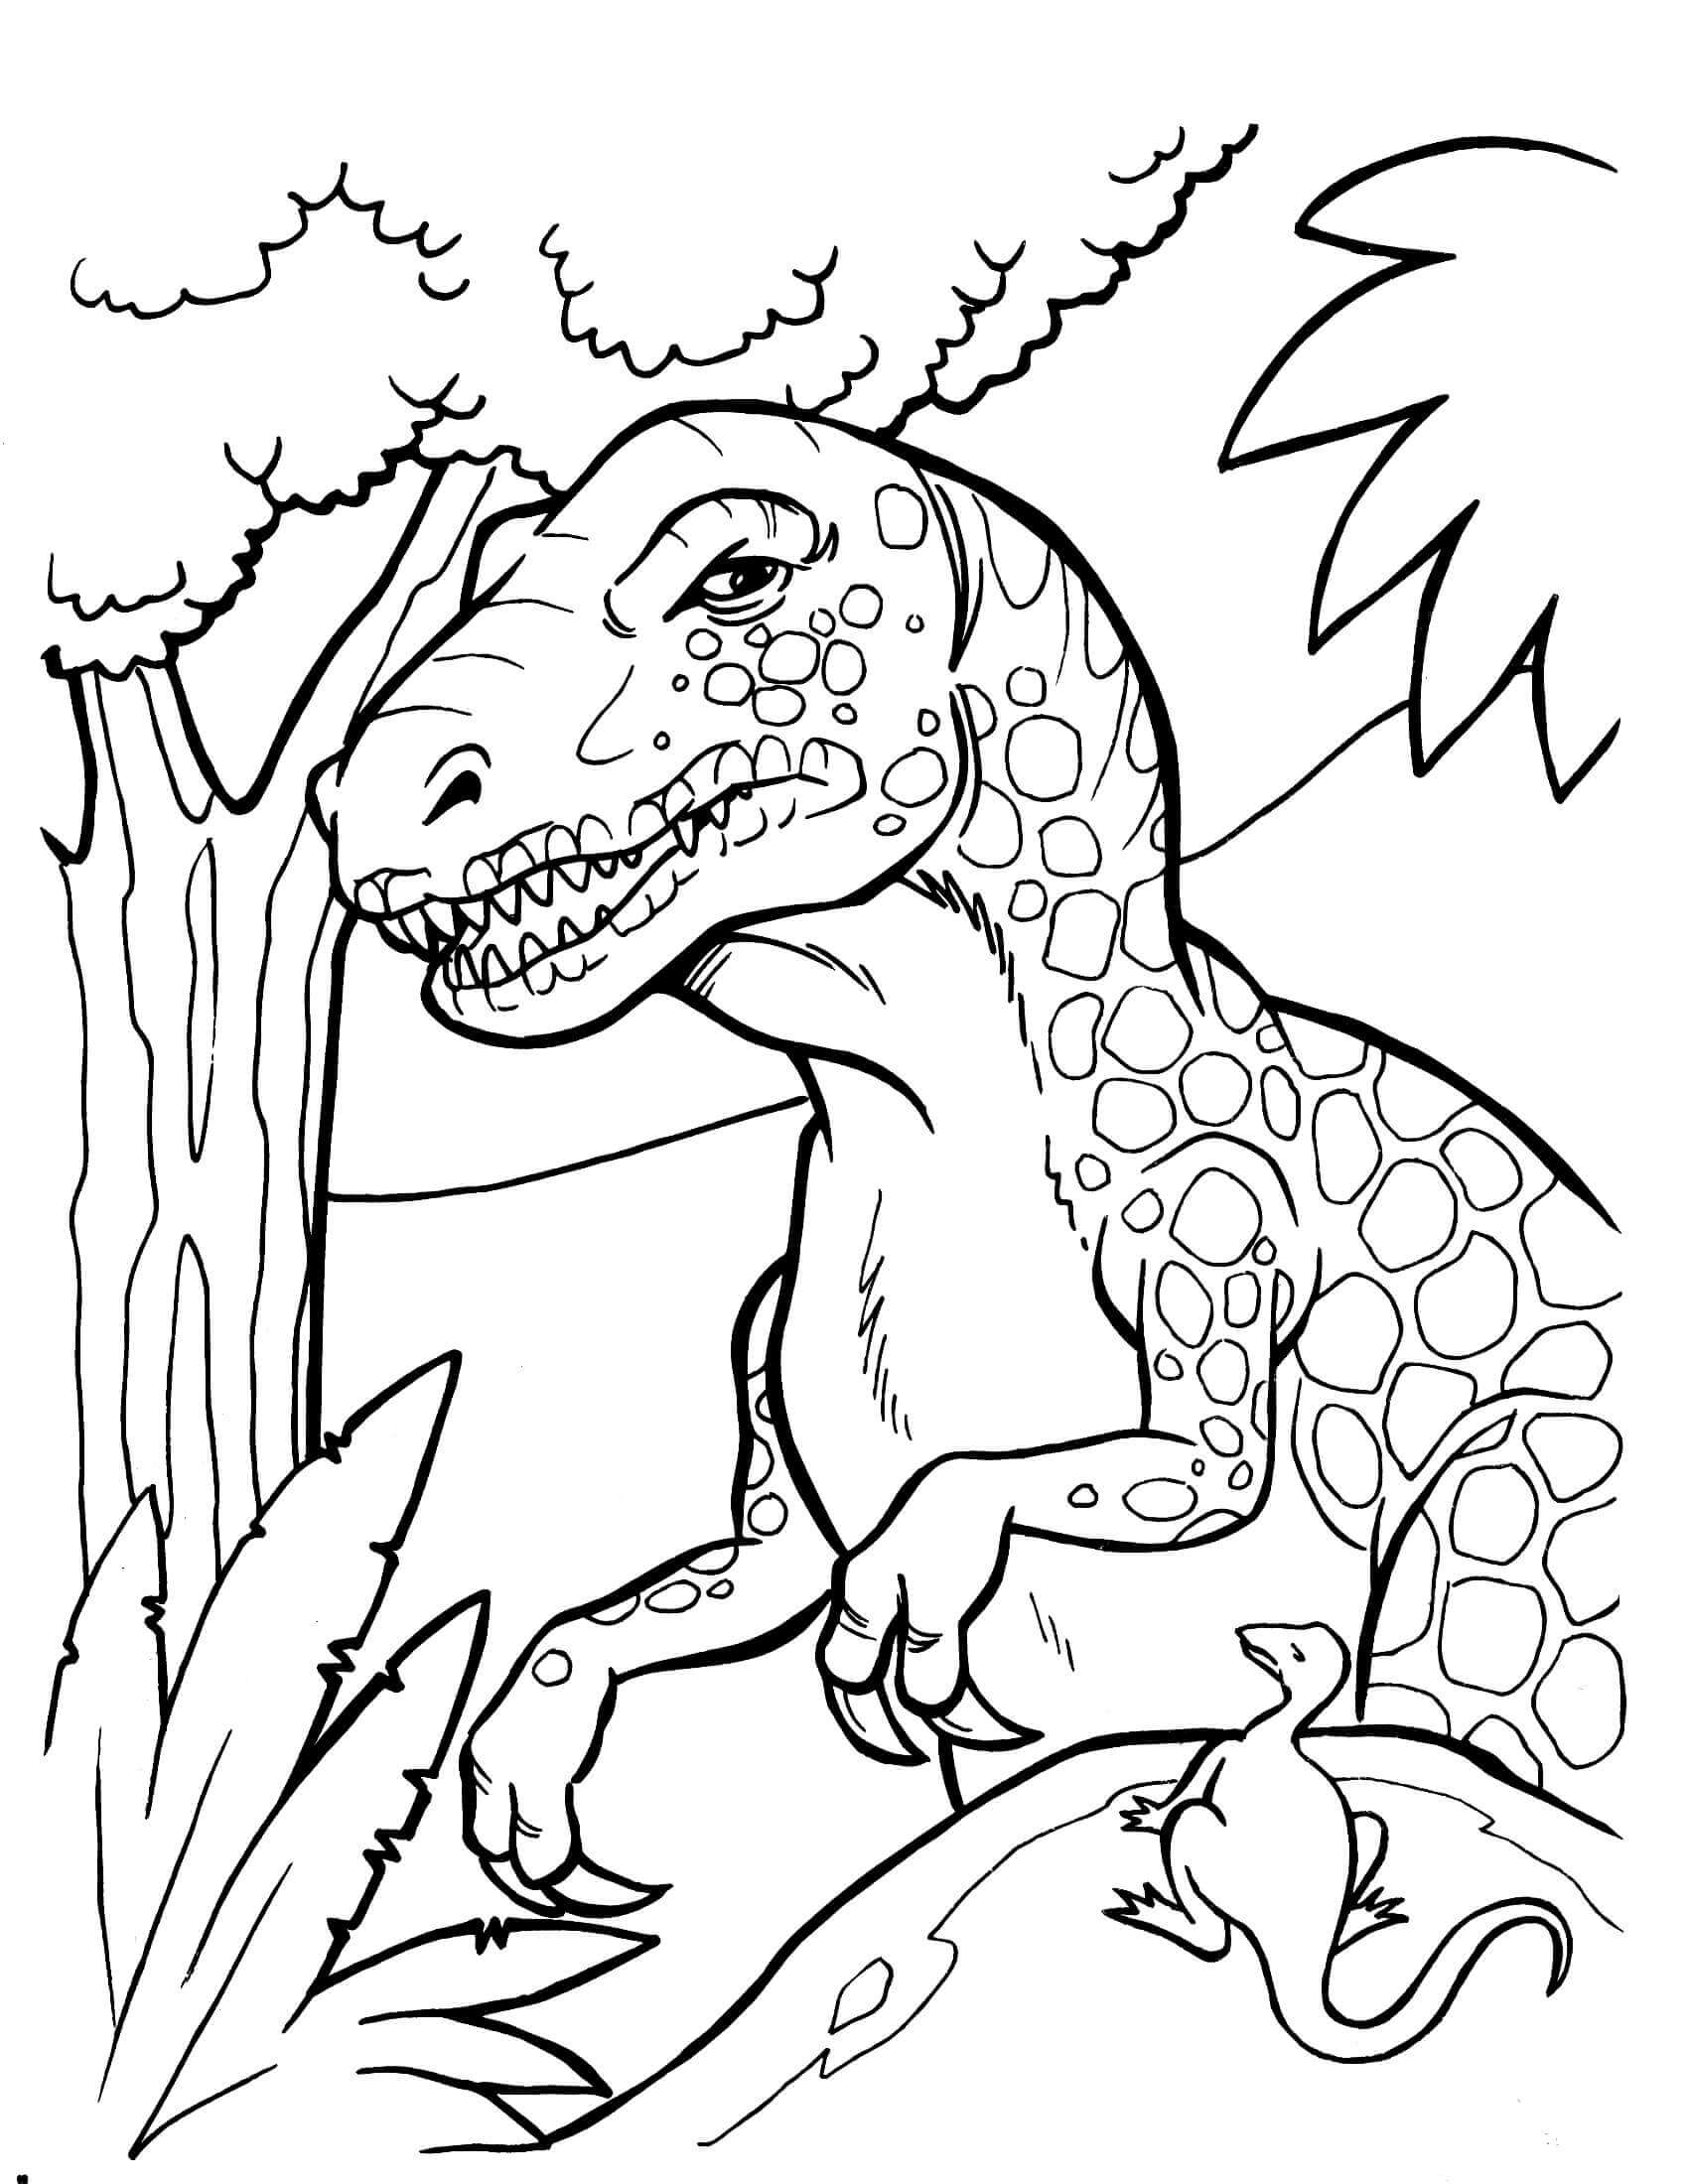 Tyrannosaurus Dinosaur Coloring Pages